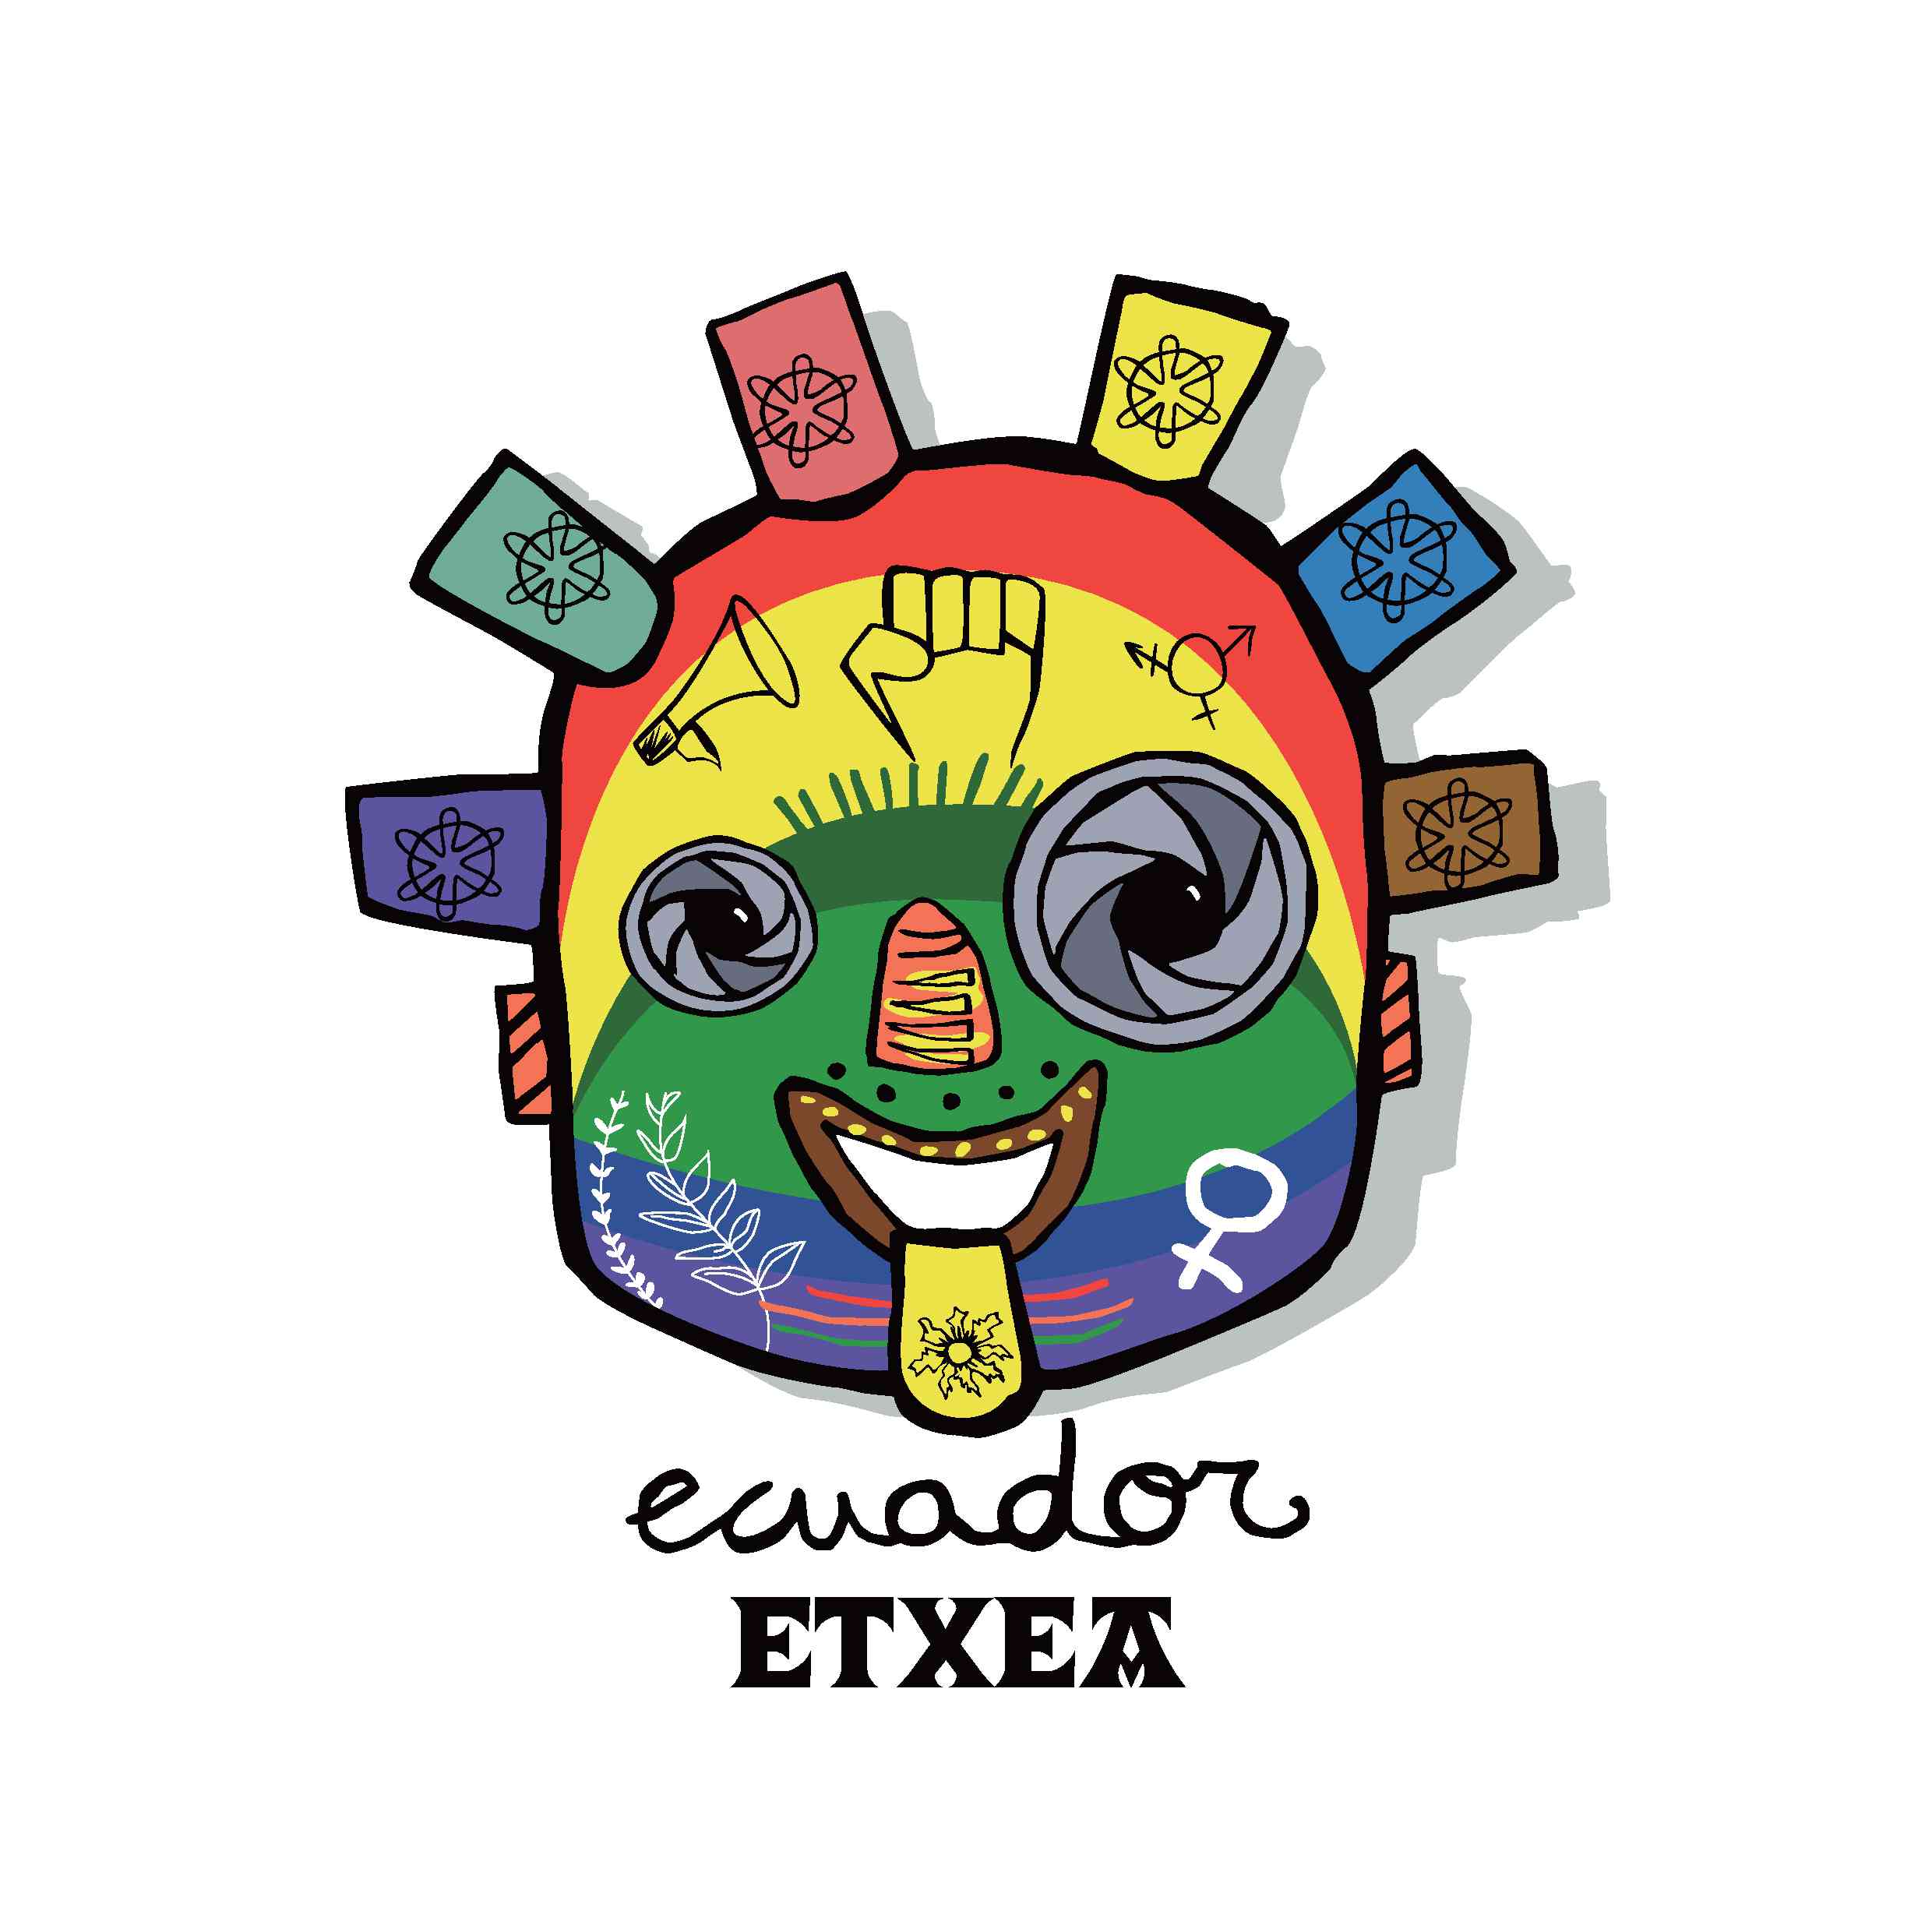 (c) Ecuadoretxea.org